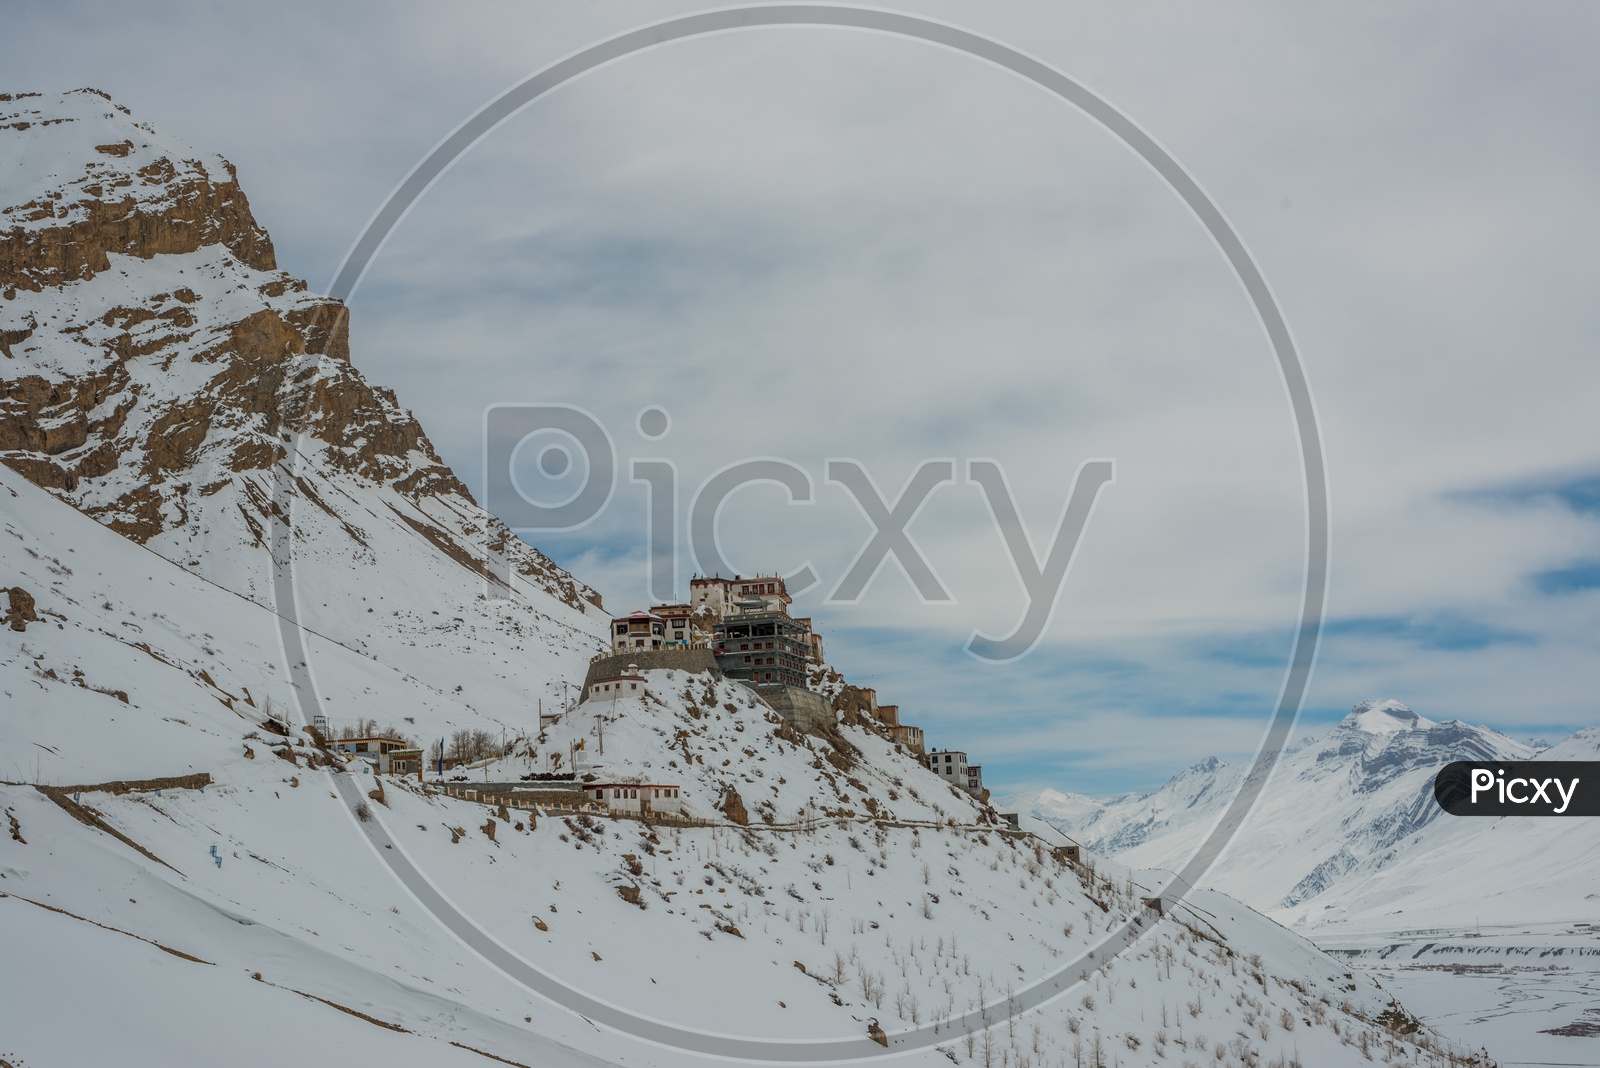 Key Monastery on Mountain in Snow in winter season